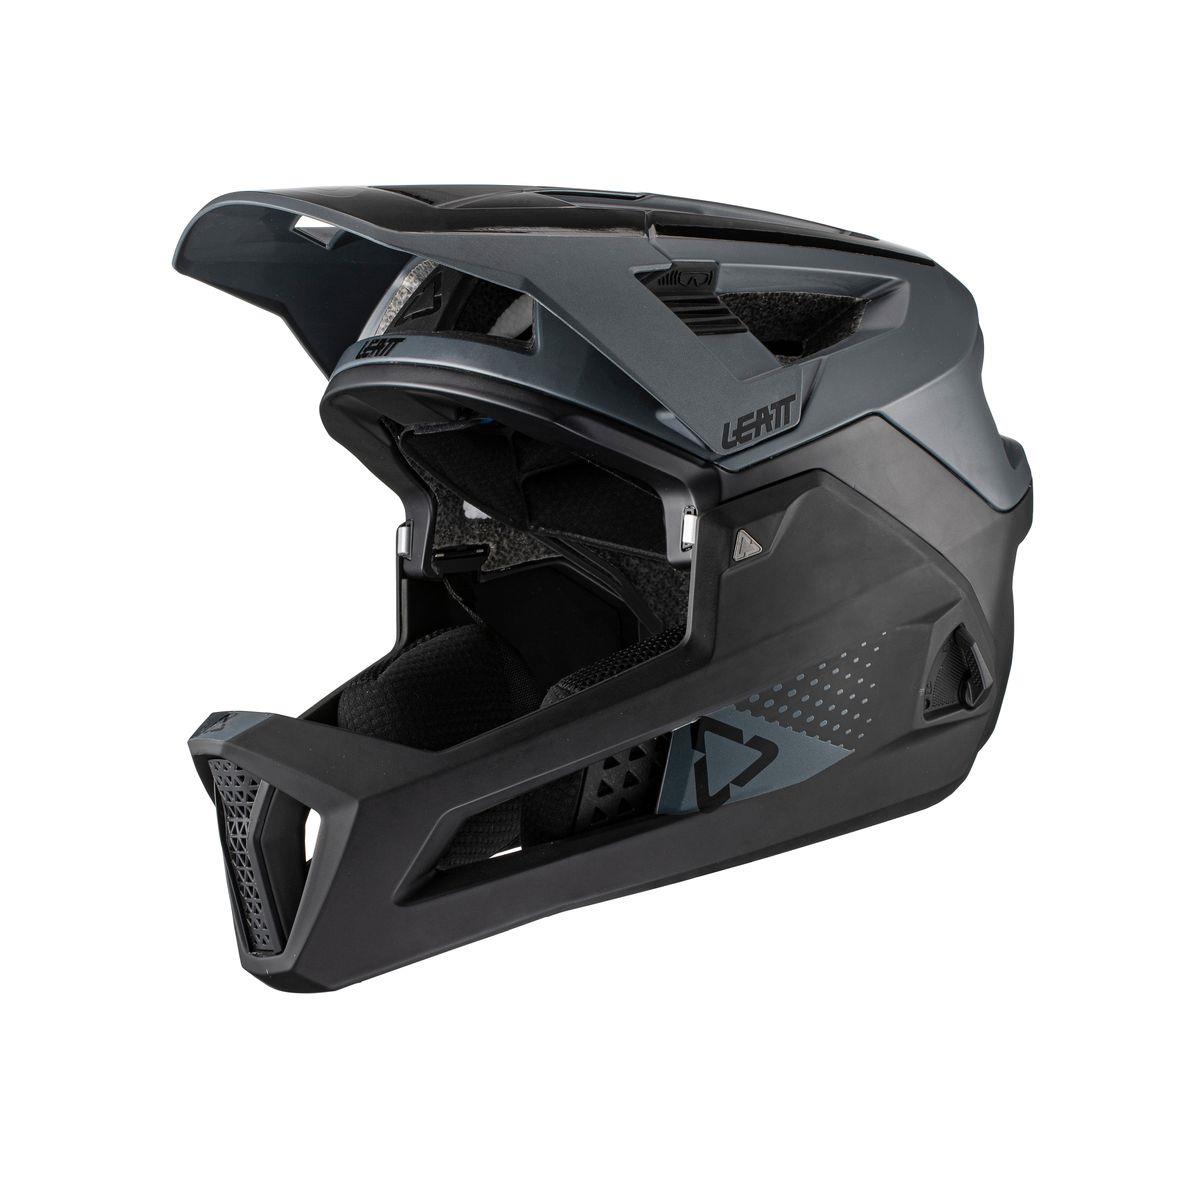 Full-Face Helmet MTB 4.0 Enduro Removable Chinguard Black/Grey Size M (55-59cm)